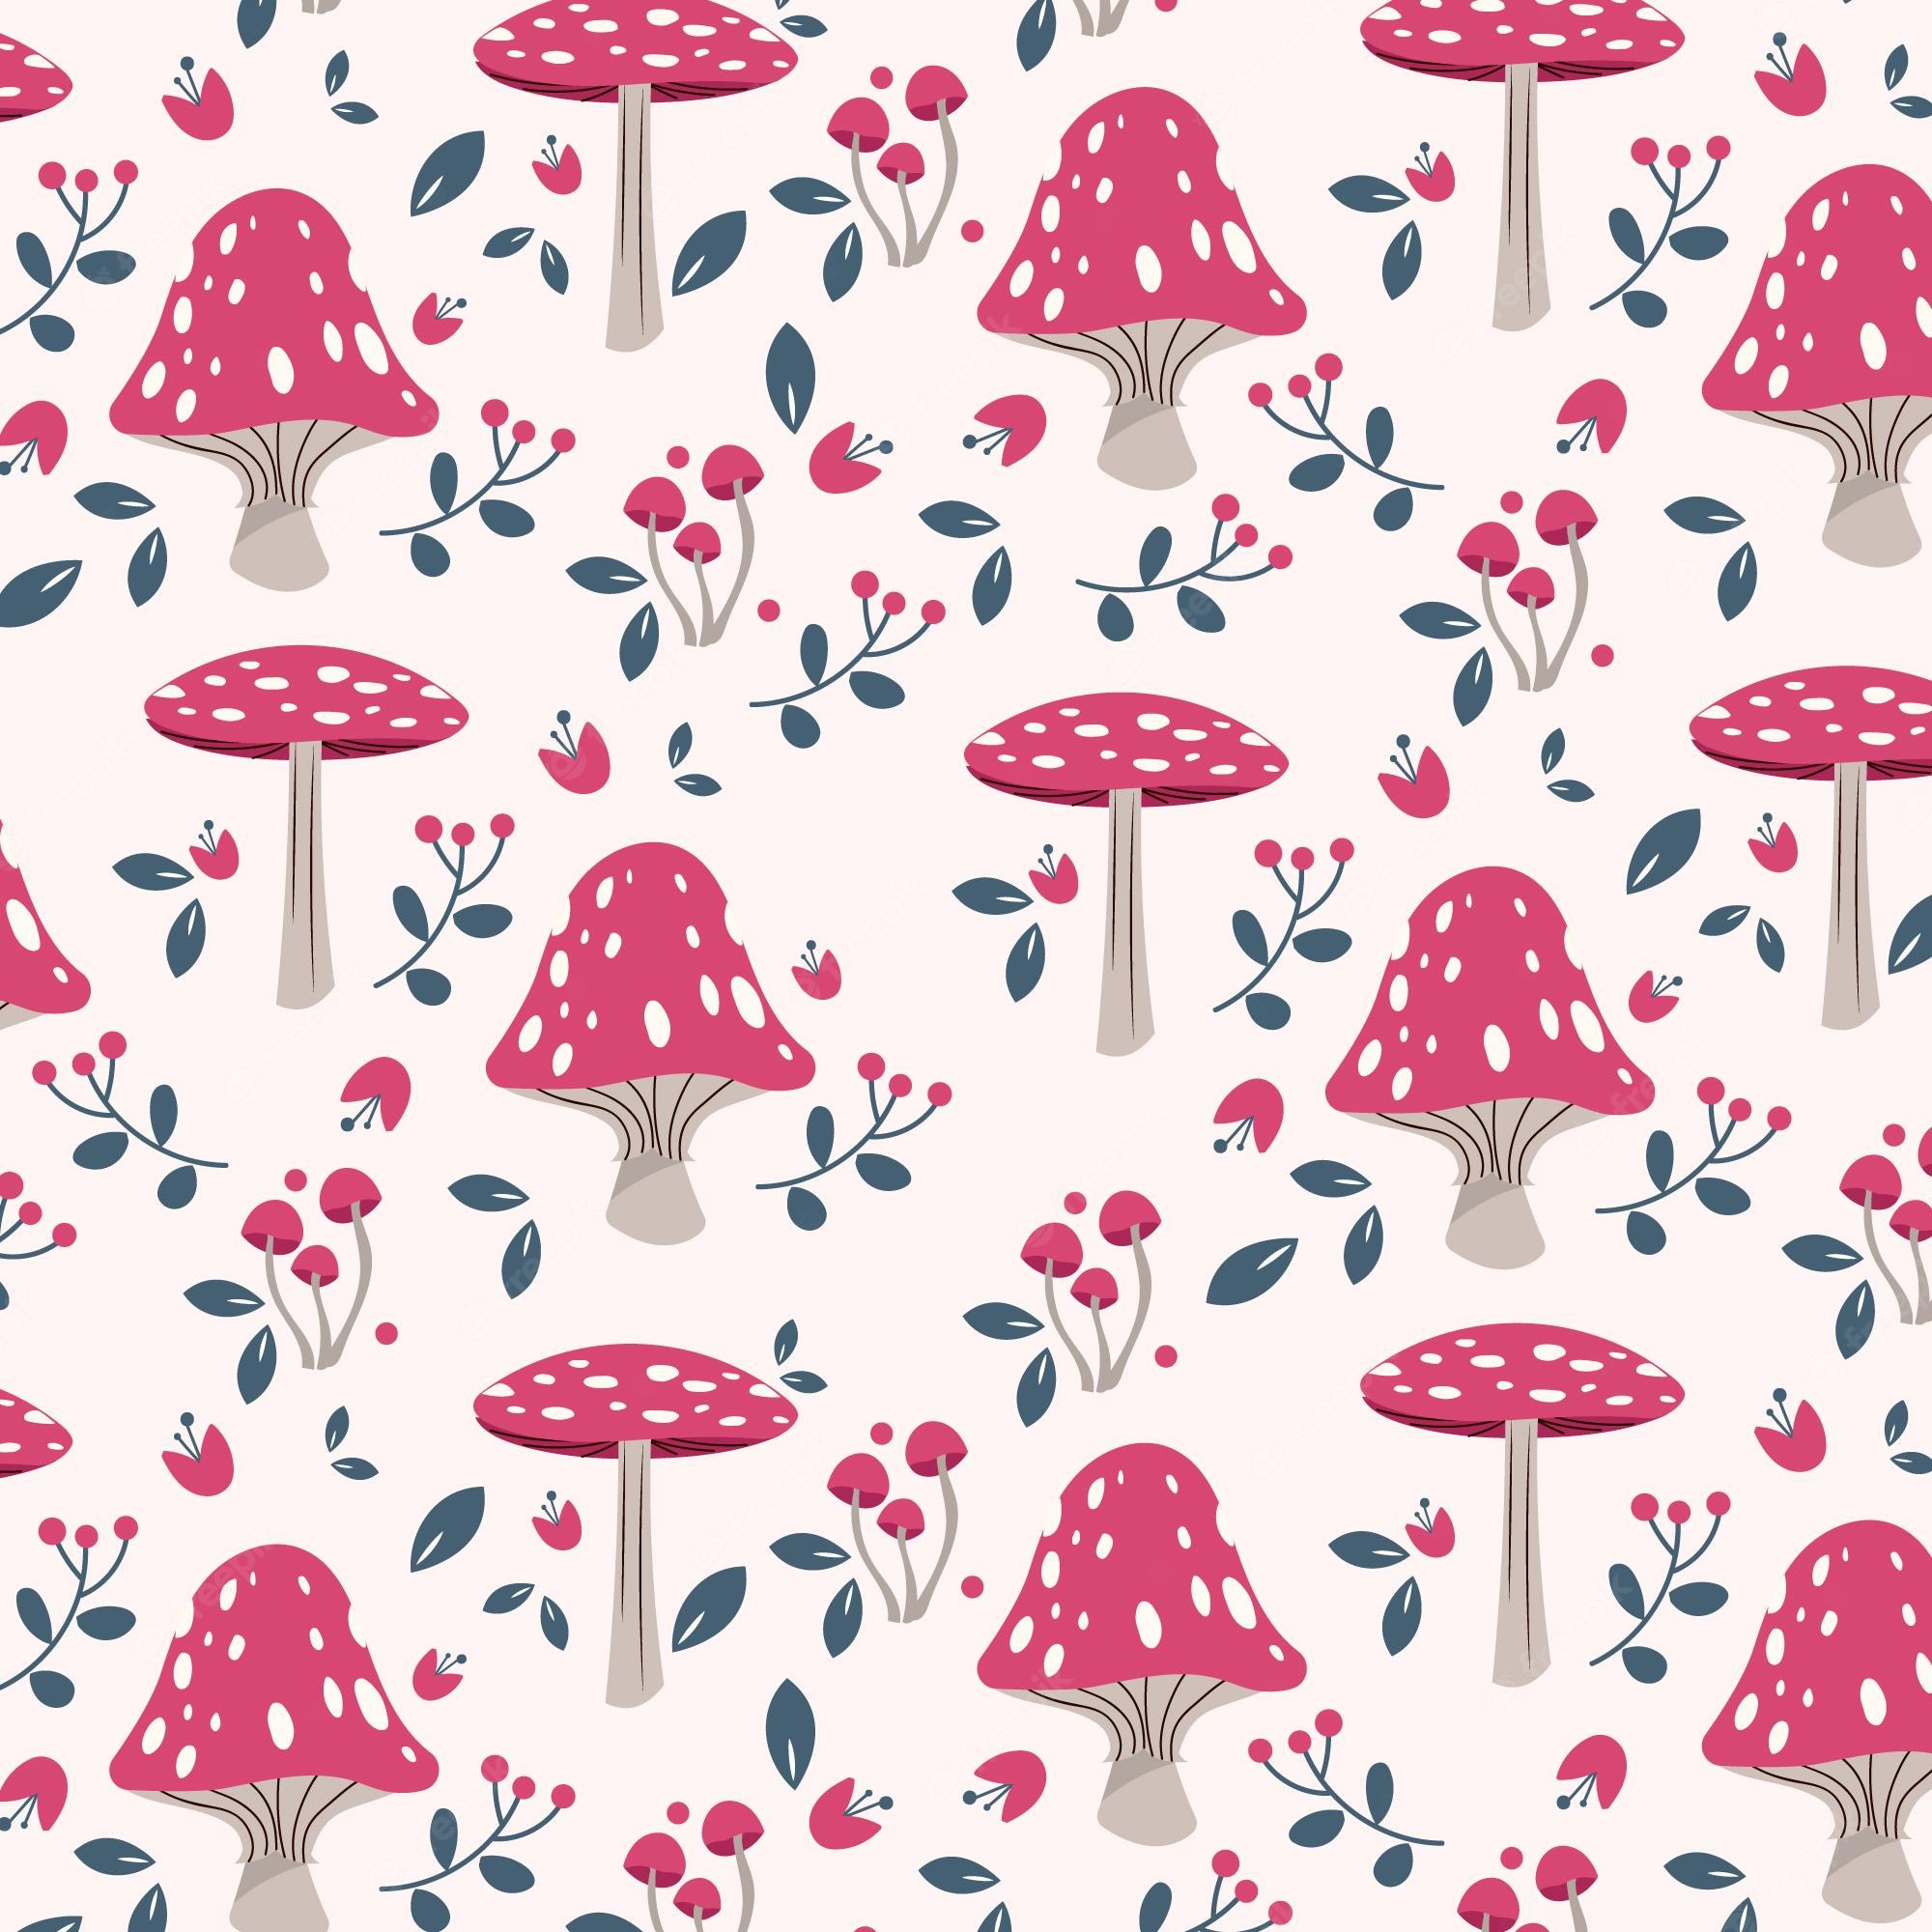 Mushroom Wallpaper Image. Free Vectors, & PSD